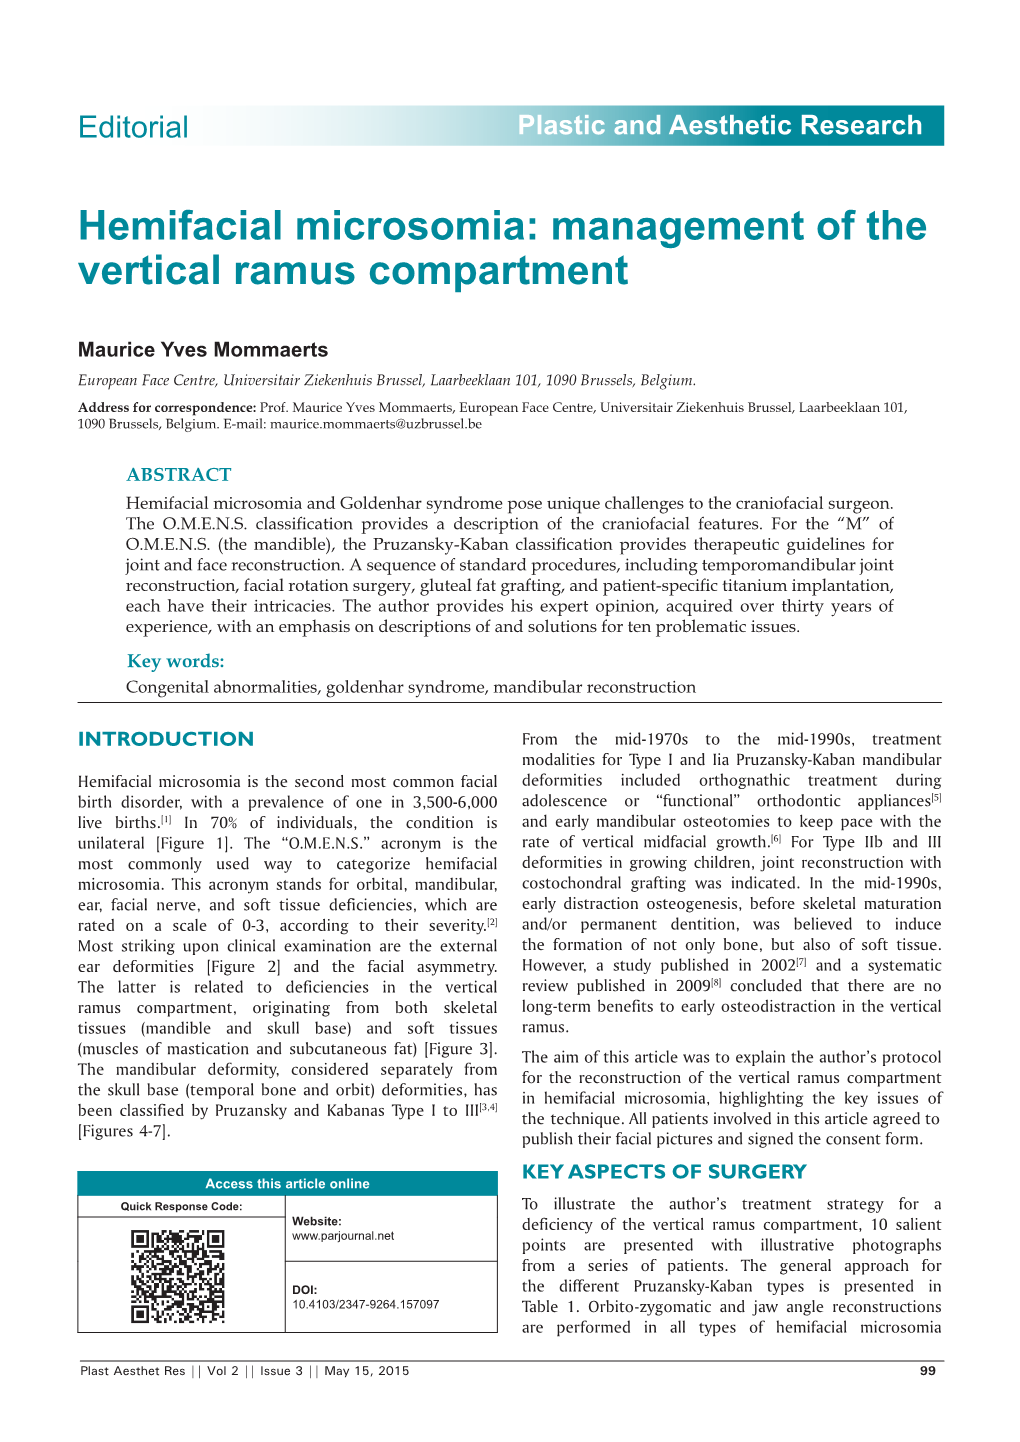 Hemifacial Microsomia: Management of the Vertical Ramus Compartment